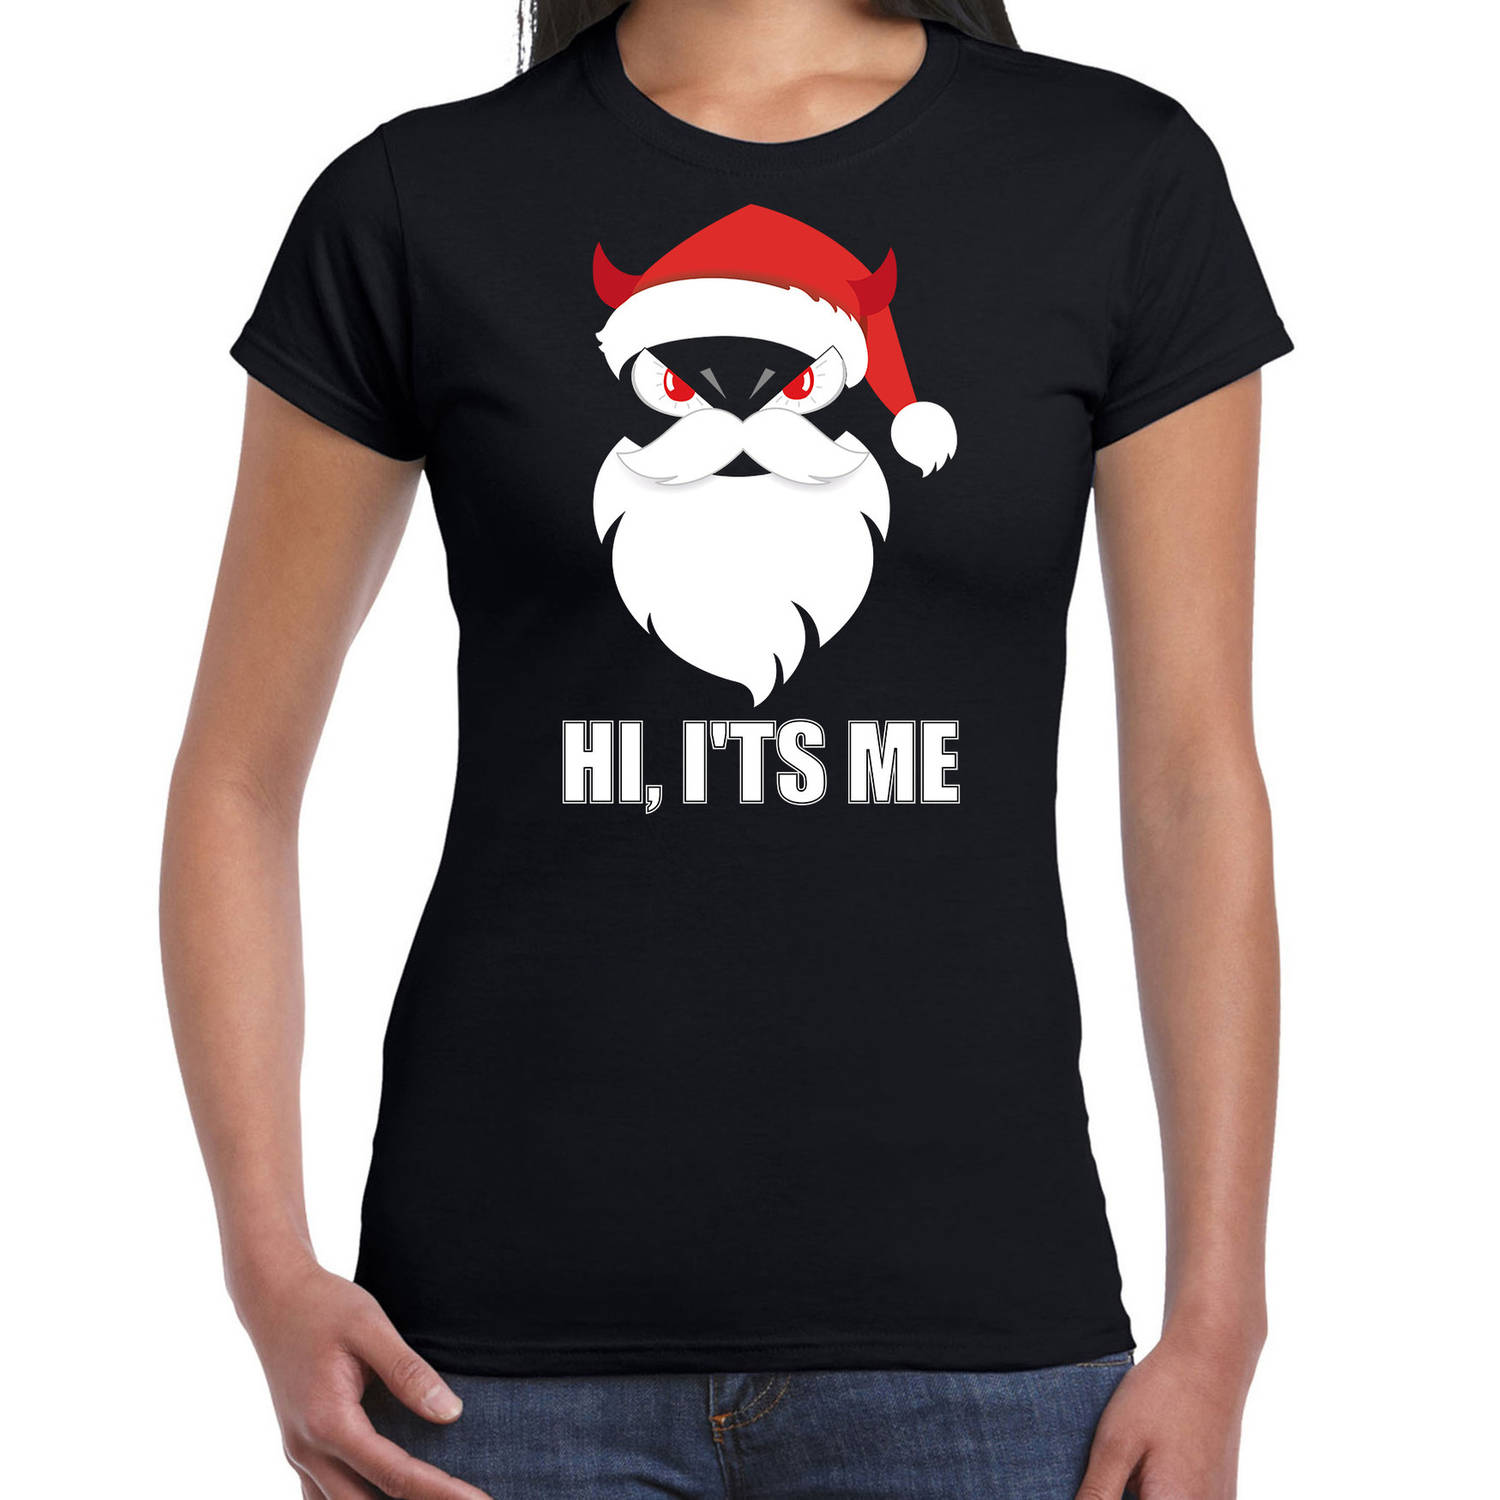 Zwart Kerstshirt / Kerstkleding Hi its me voor dames met duivels kerstmannetje 2XL - kerst t-shirts